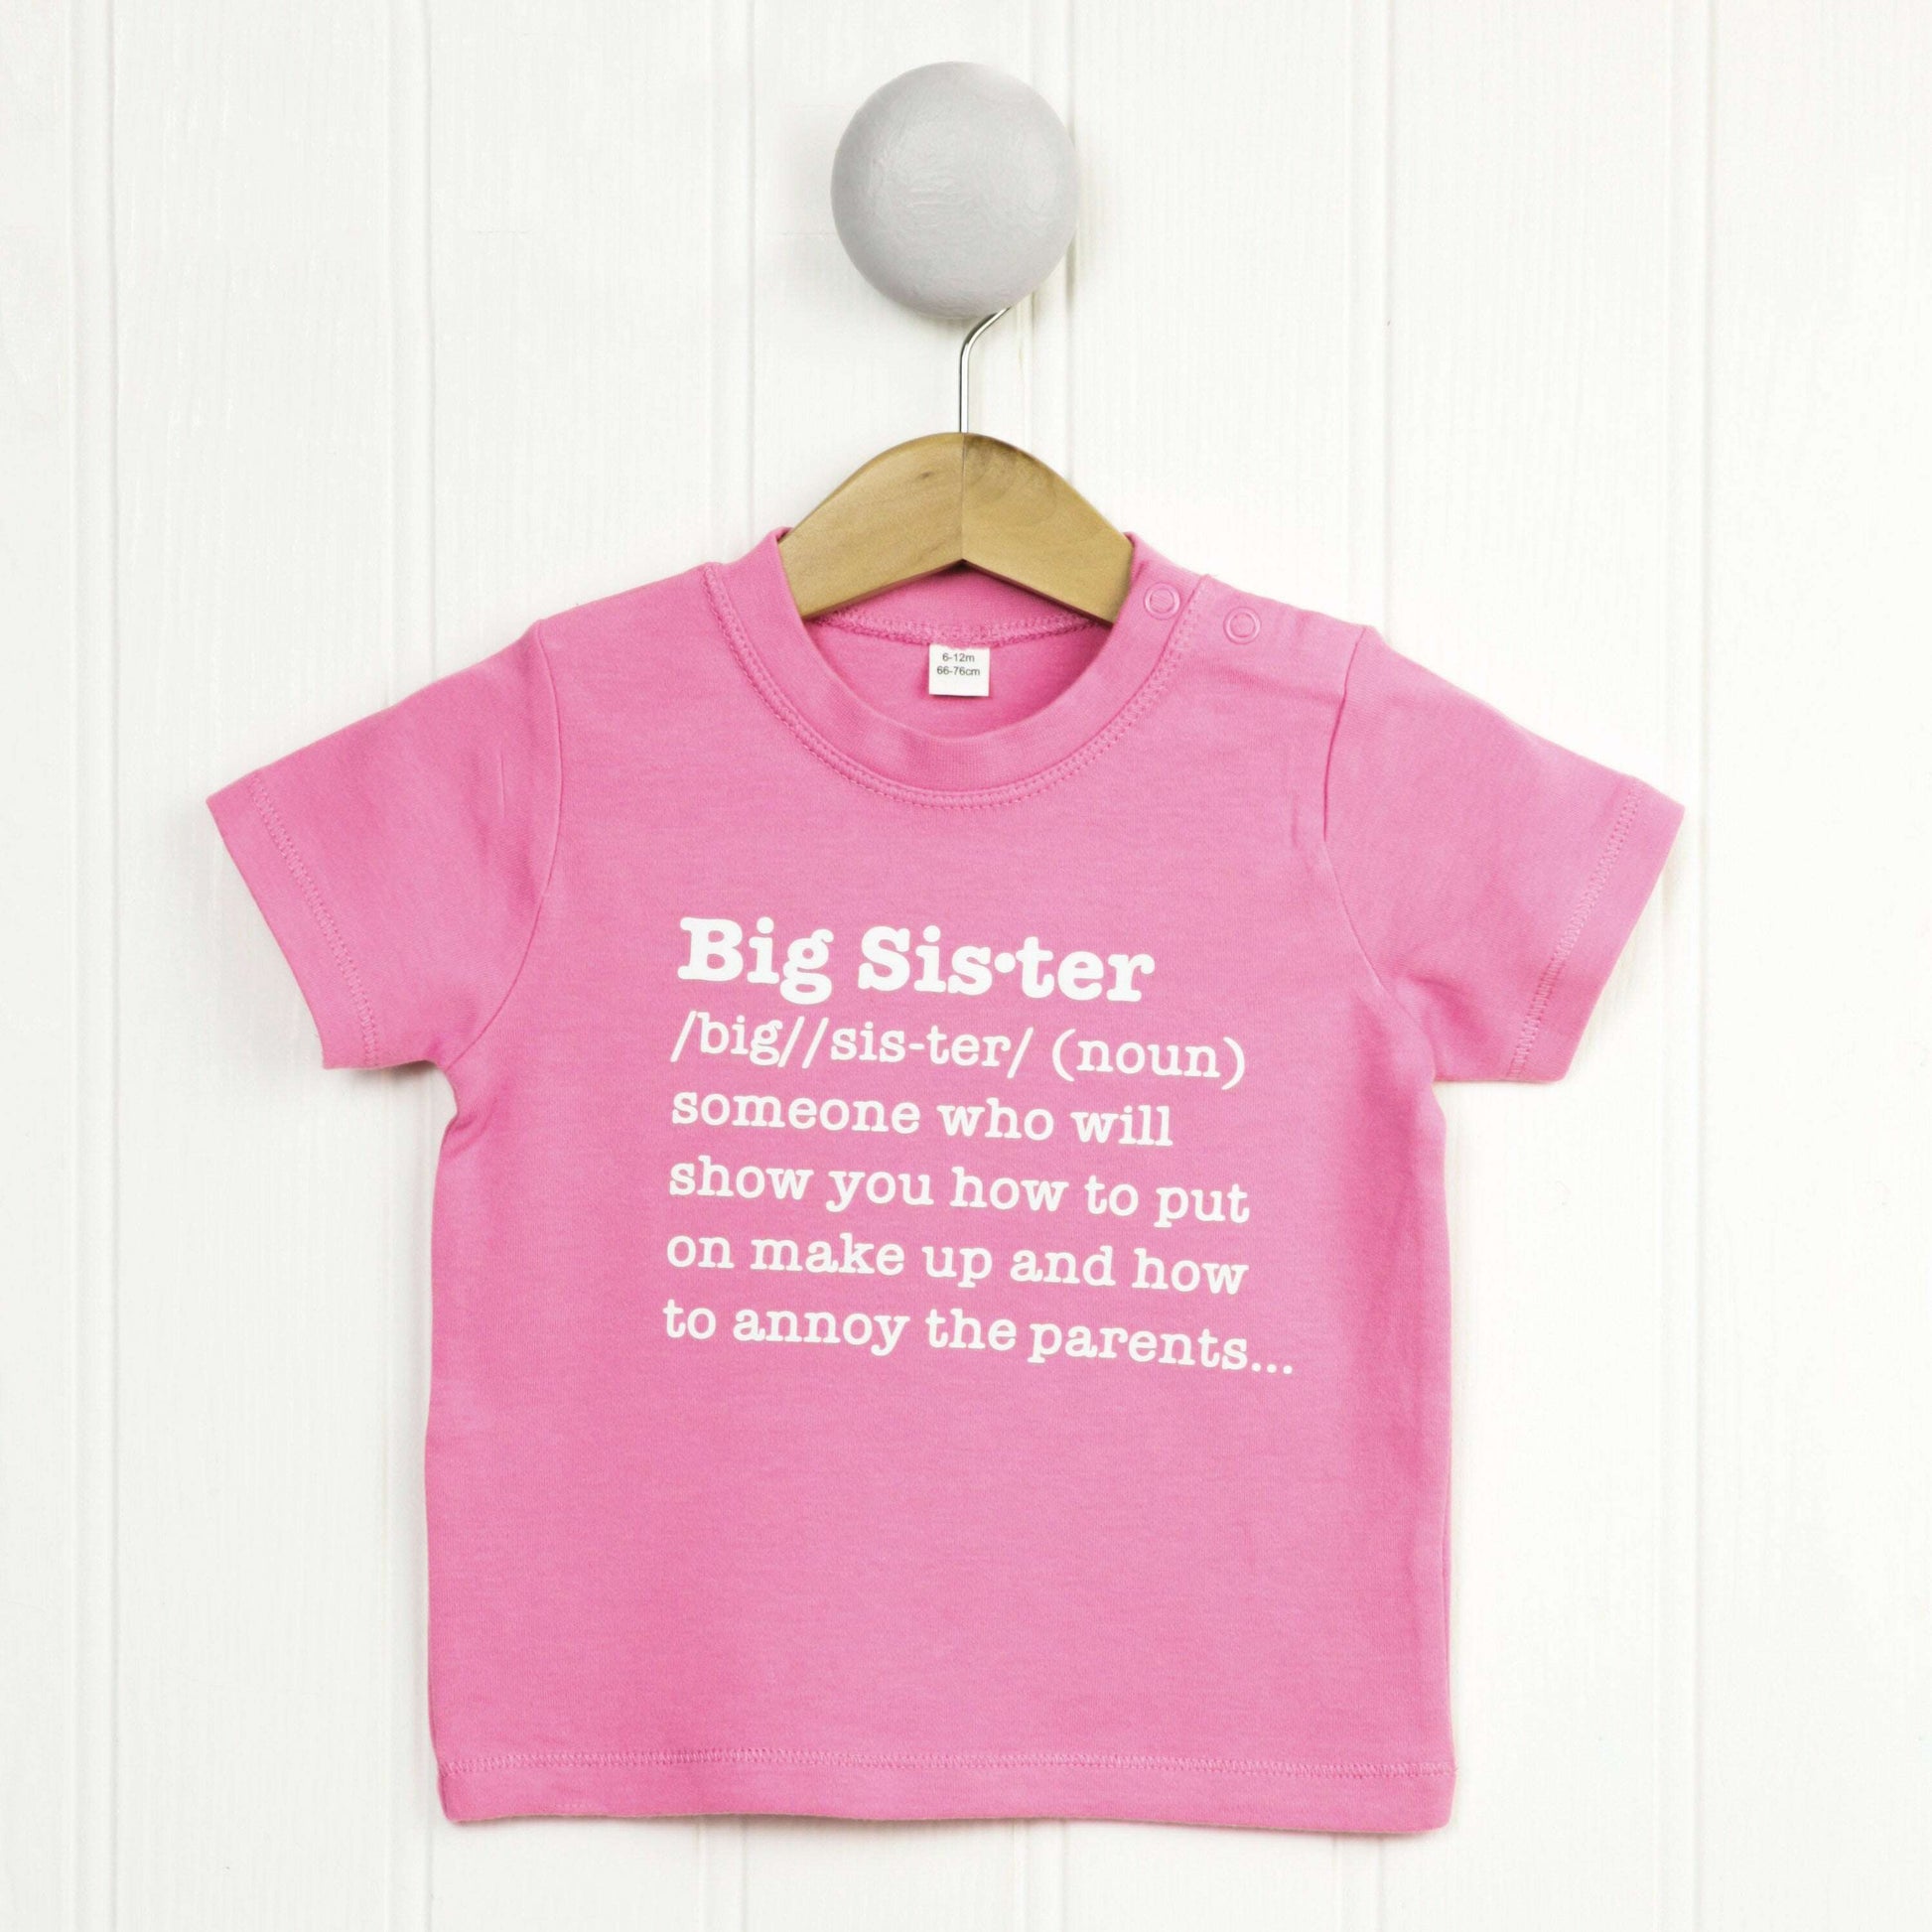 Big Sister Funny Definition T Shirt, Big sister Gift, Funny kids tee, cute kids shirt, cute kids clothes, girls sibling t-shirt